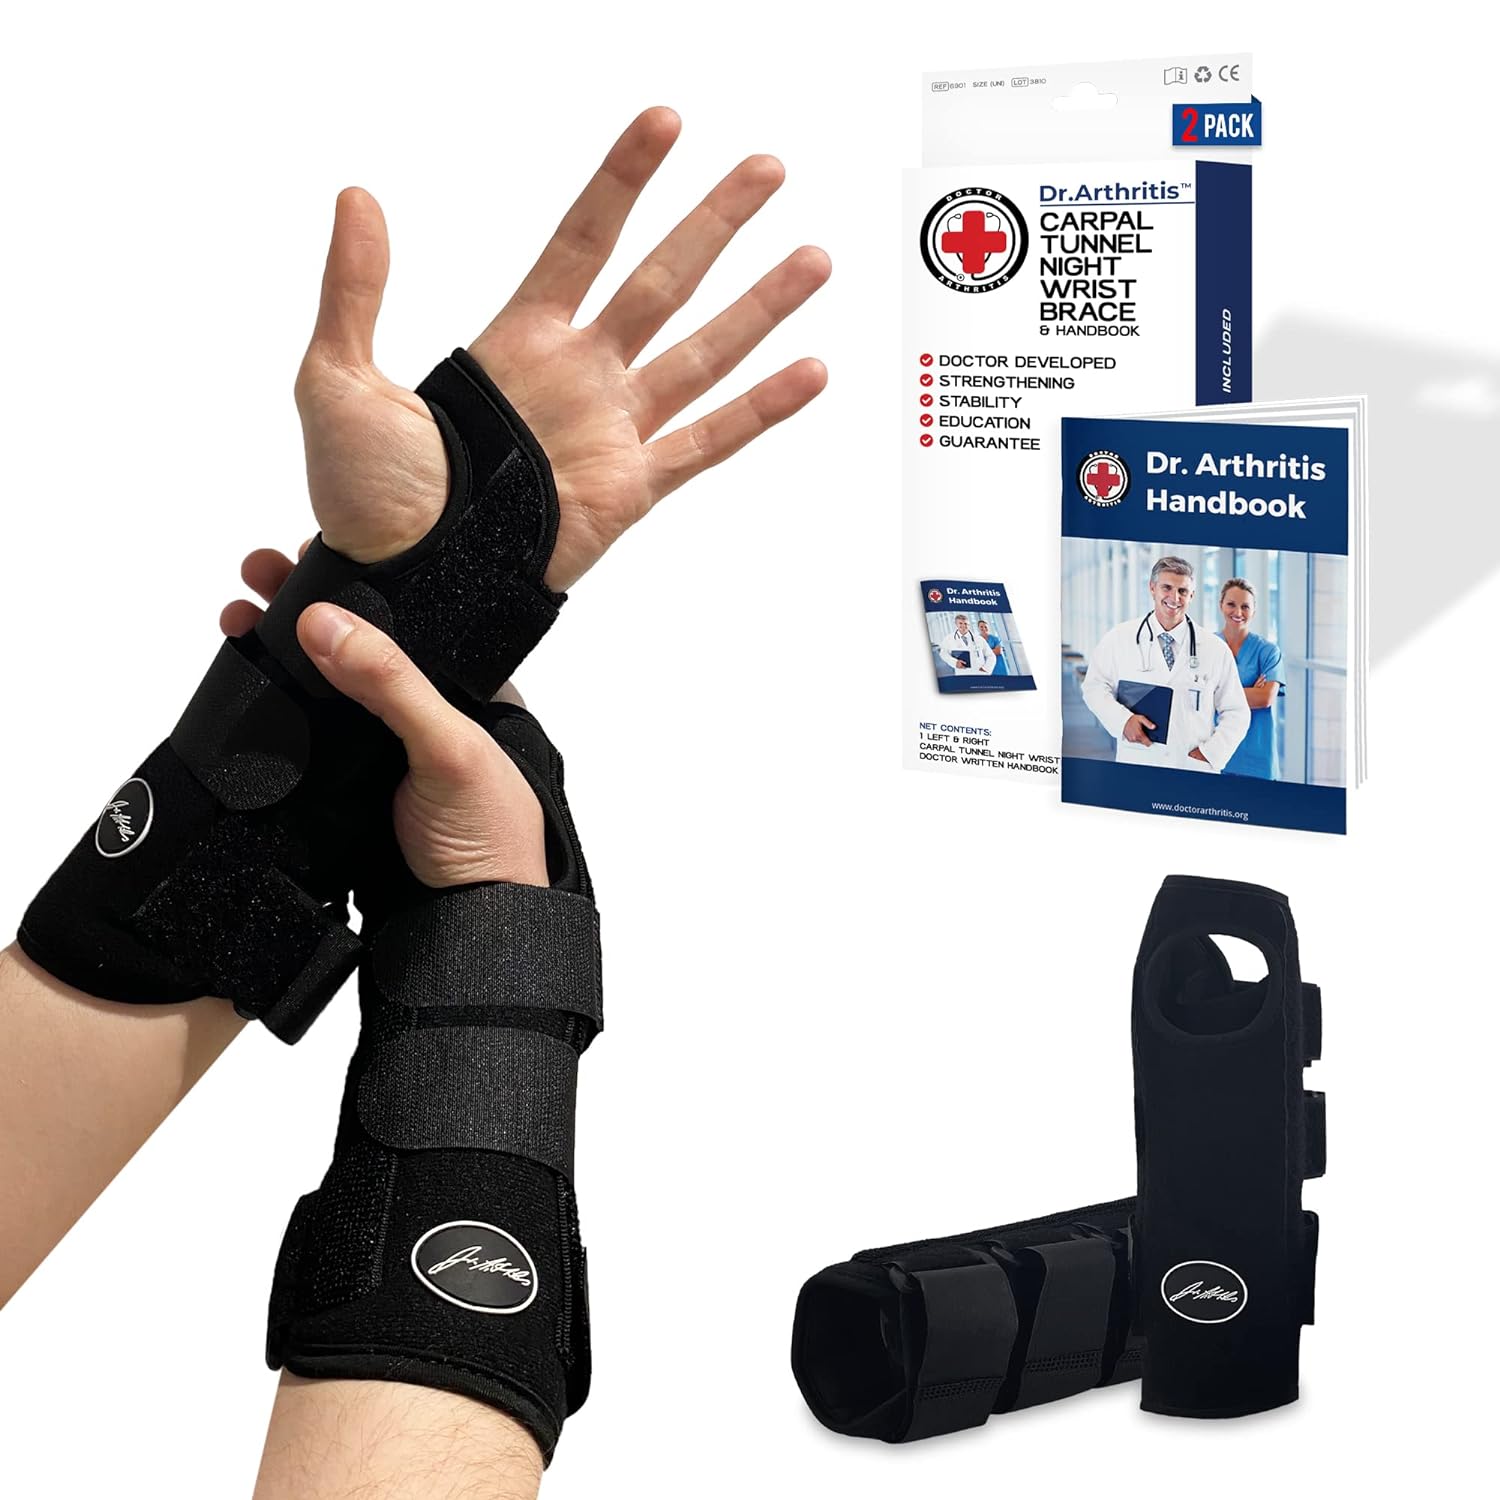 Doctor Developed Carpal Tunnel Wrist Brace for Night Support - Wrist Brace for Carpal Tunnel with Wrist Splint - Sleep Brace for Sprained Wrist - F.D.A Medical Device  Handbook (2-Pack)